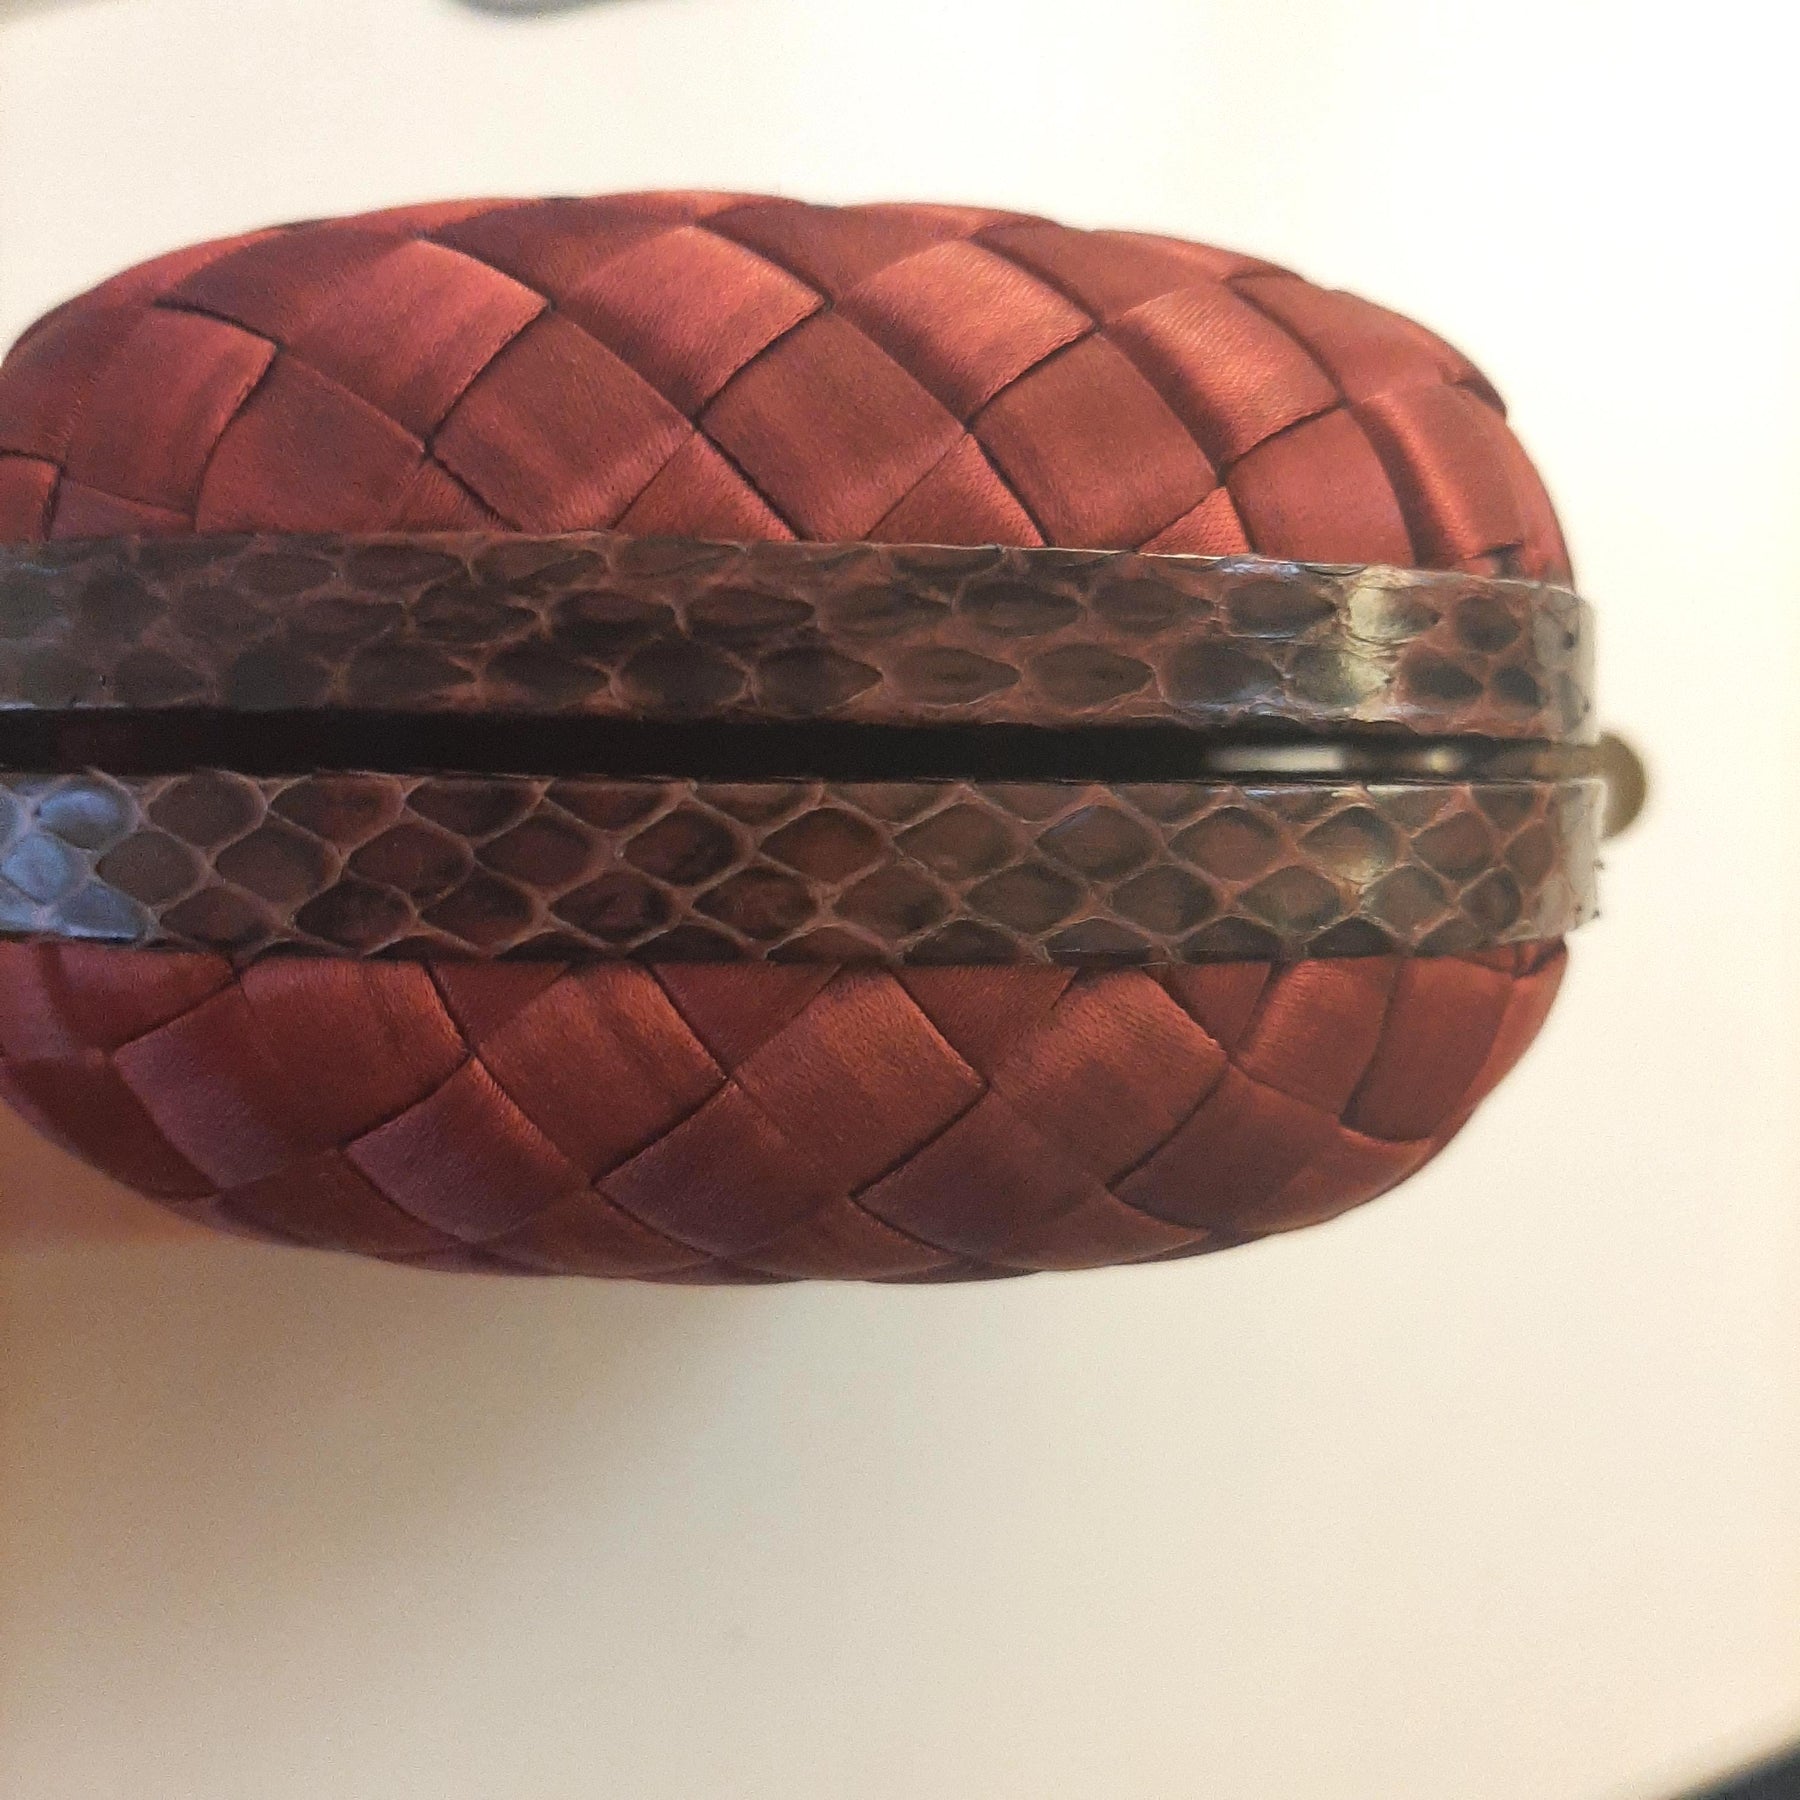 Bottega Veneta - Authenticated Pochette Knot Clutch Bag - Leather Brown Plain for Women, Very Good Condition